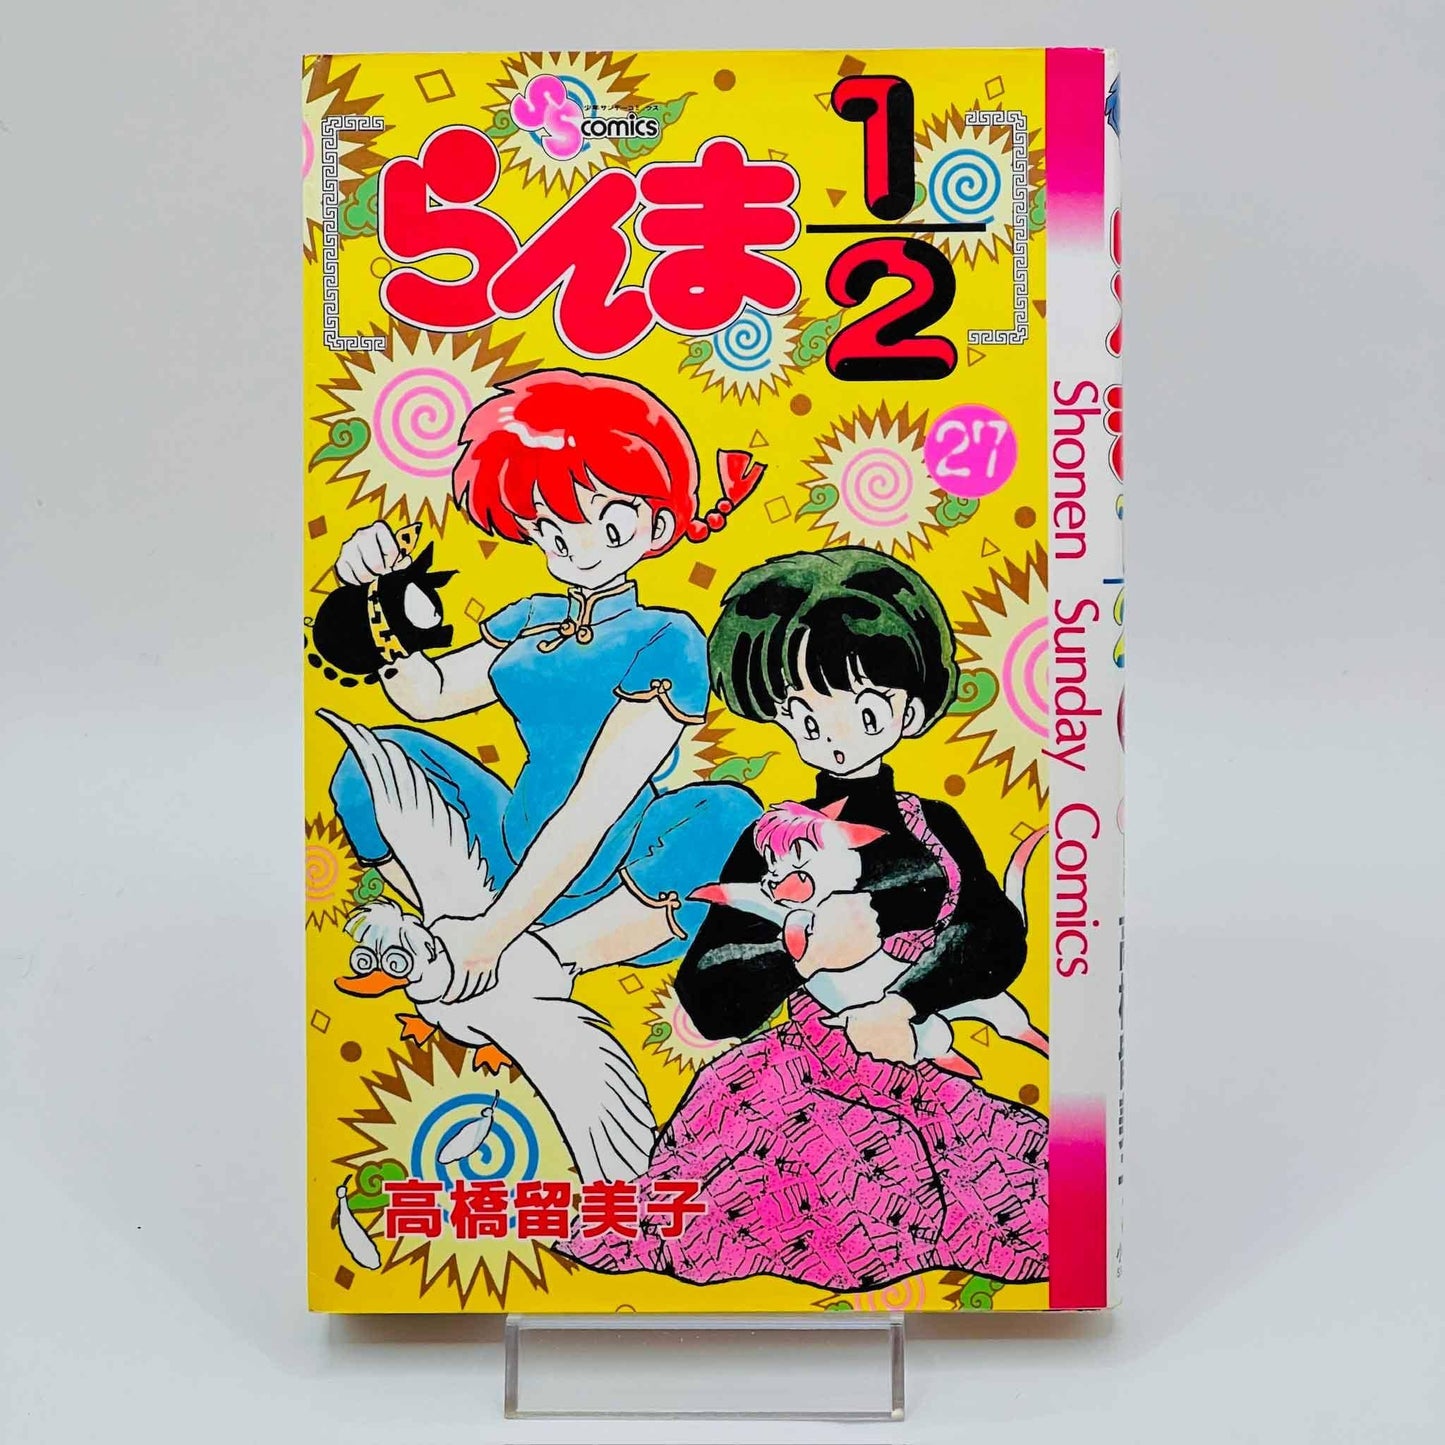 Ranma ½ - Volume 27 - 1stPrint.net - 1st First Print Edition Manga Store - M-RANMA-27-001